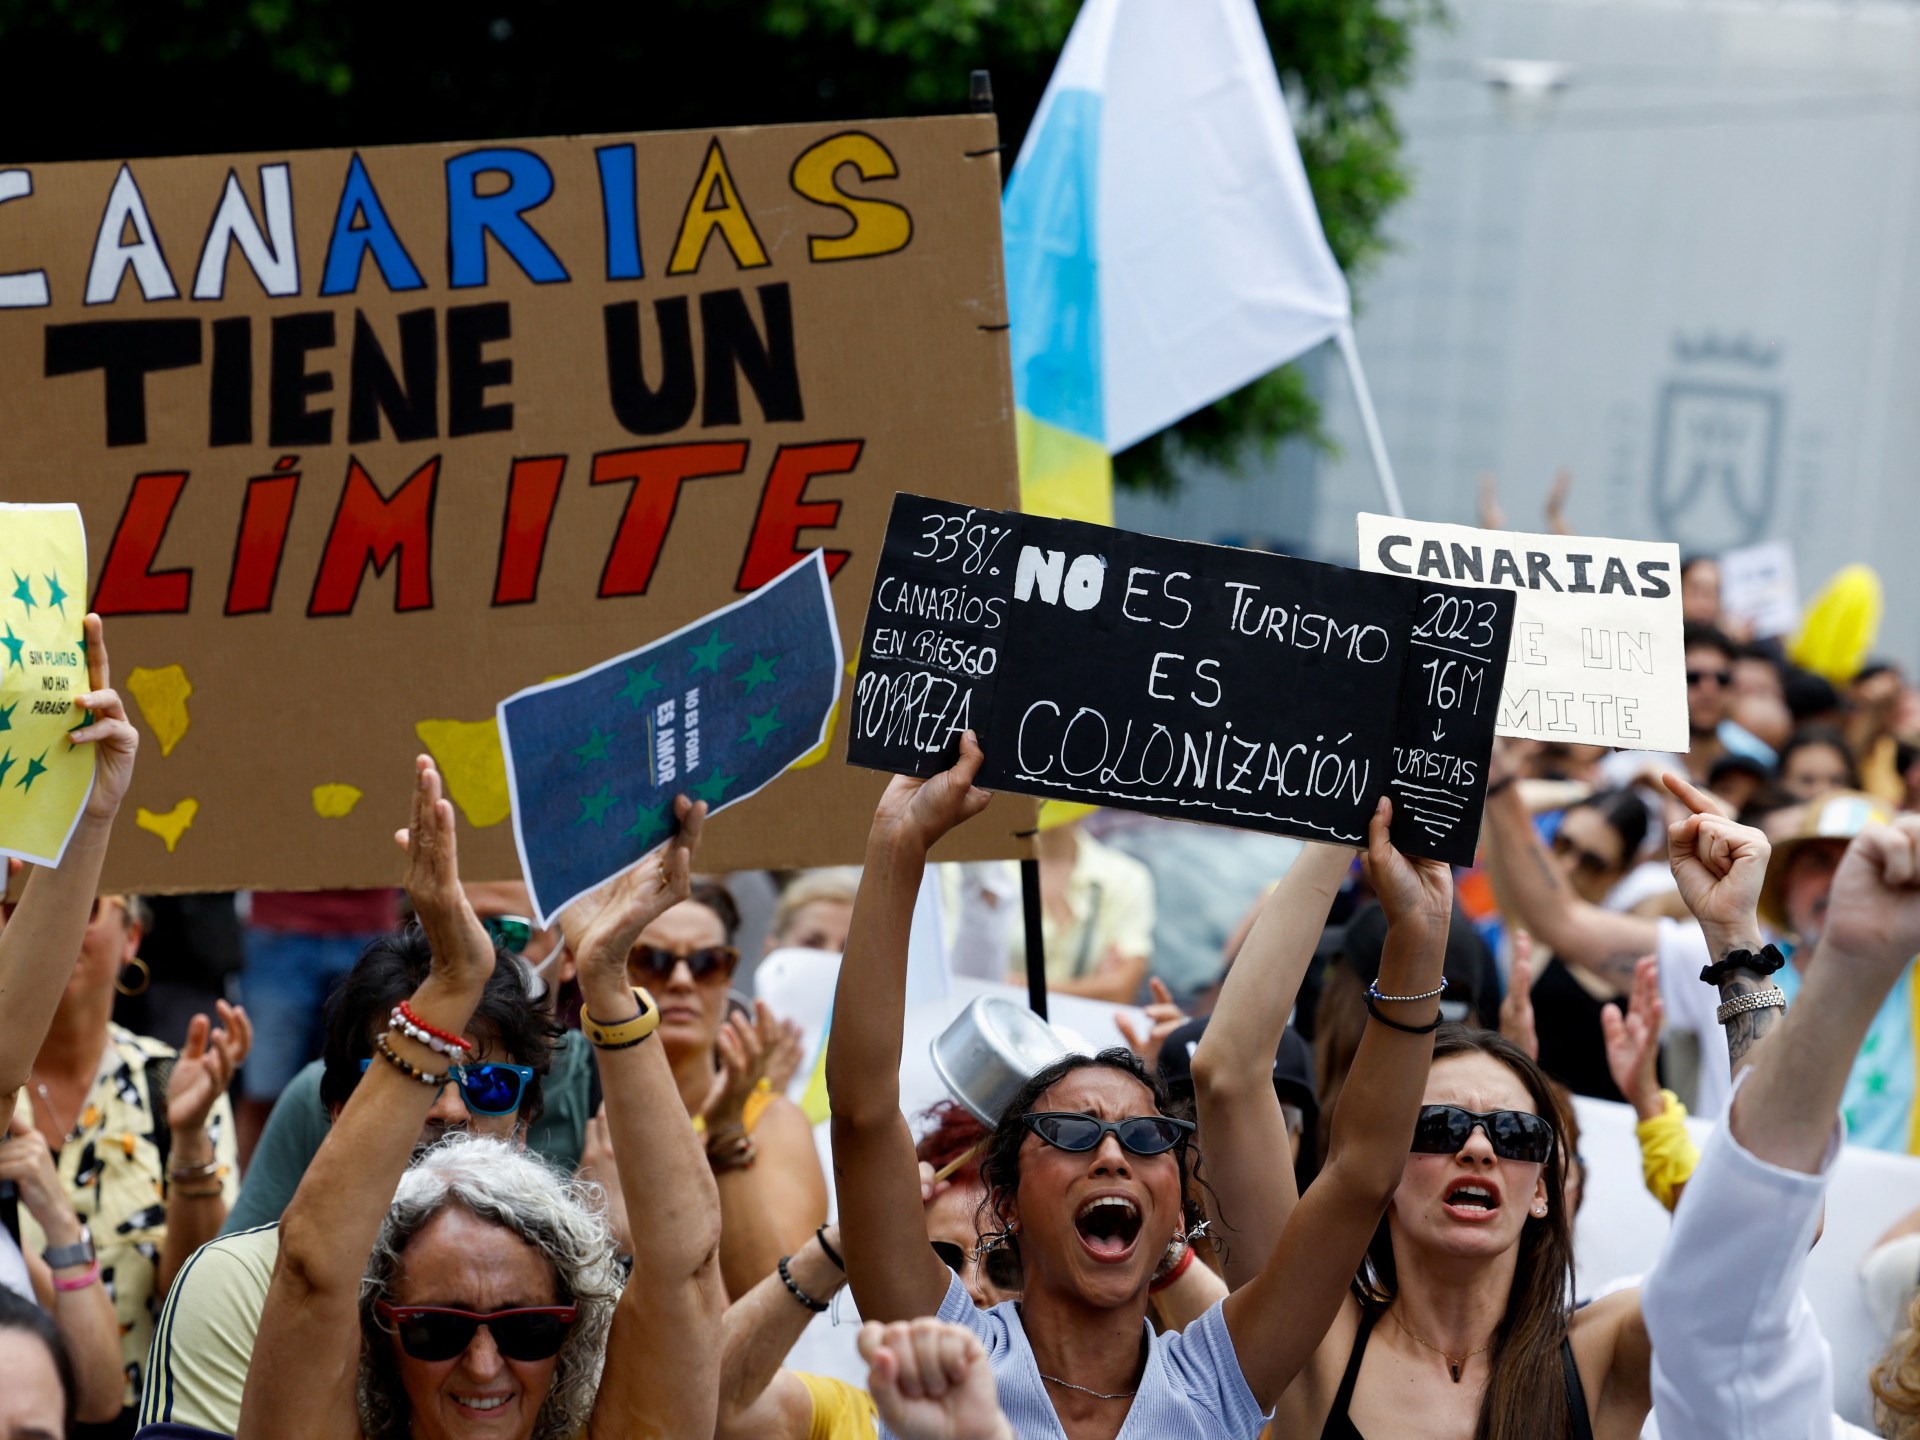 Тысячи людей протестуют против чрезмерного туризма на Канарских островах в Испании  Новости туризма